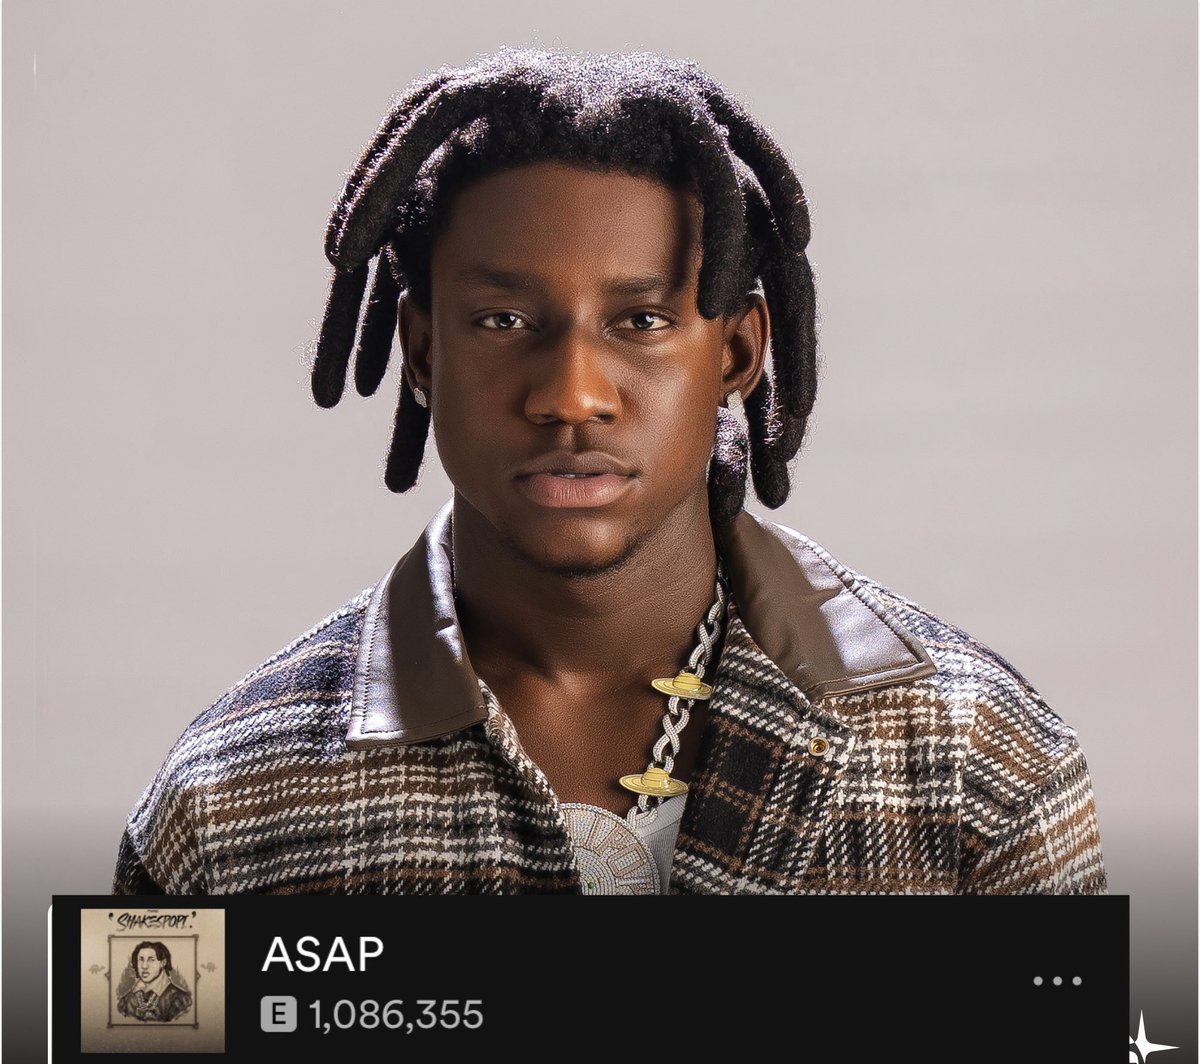 🚨Shallipopi’s ‘ASAP’ has surpassed over 1 Million + Streams on Spotify.